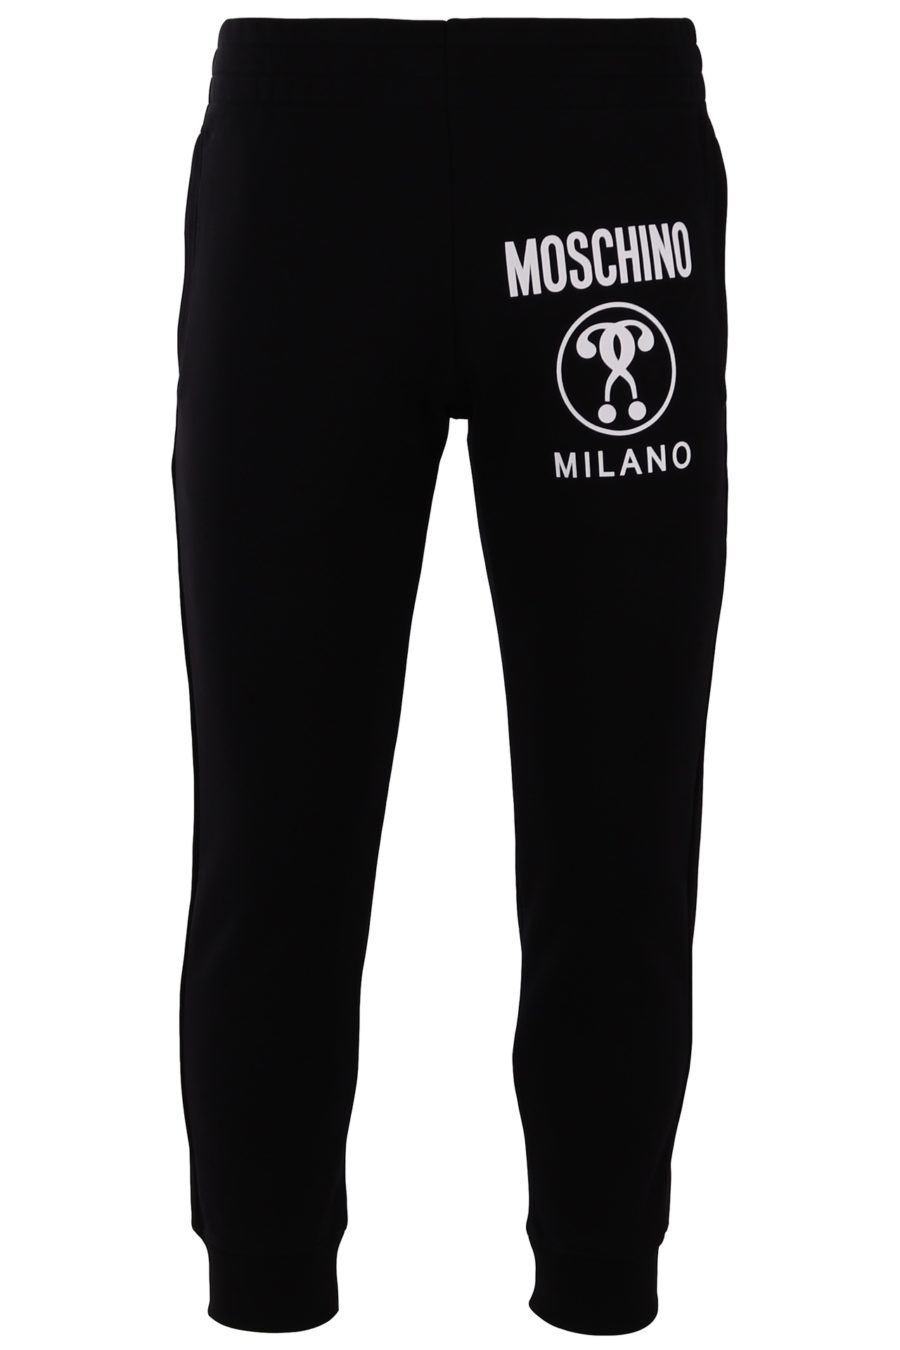 Pantalon Moschino Couture noir avec grand logo - 482c517e30947e9e95ad07b6e8c33182dc14b19c